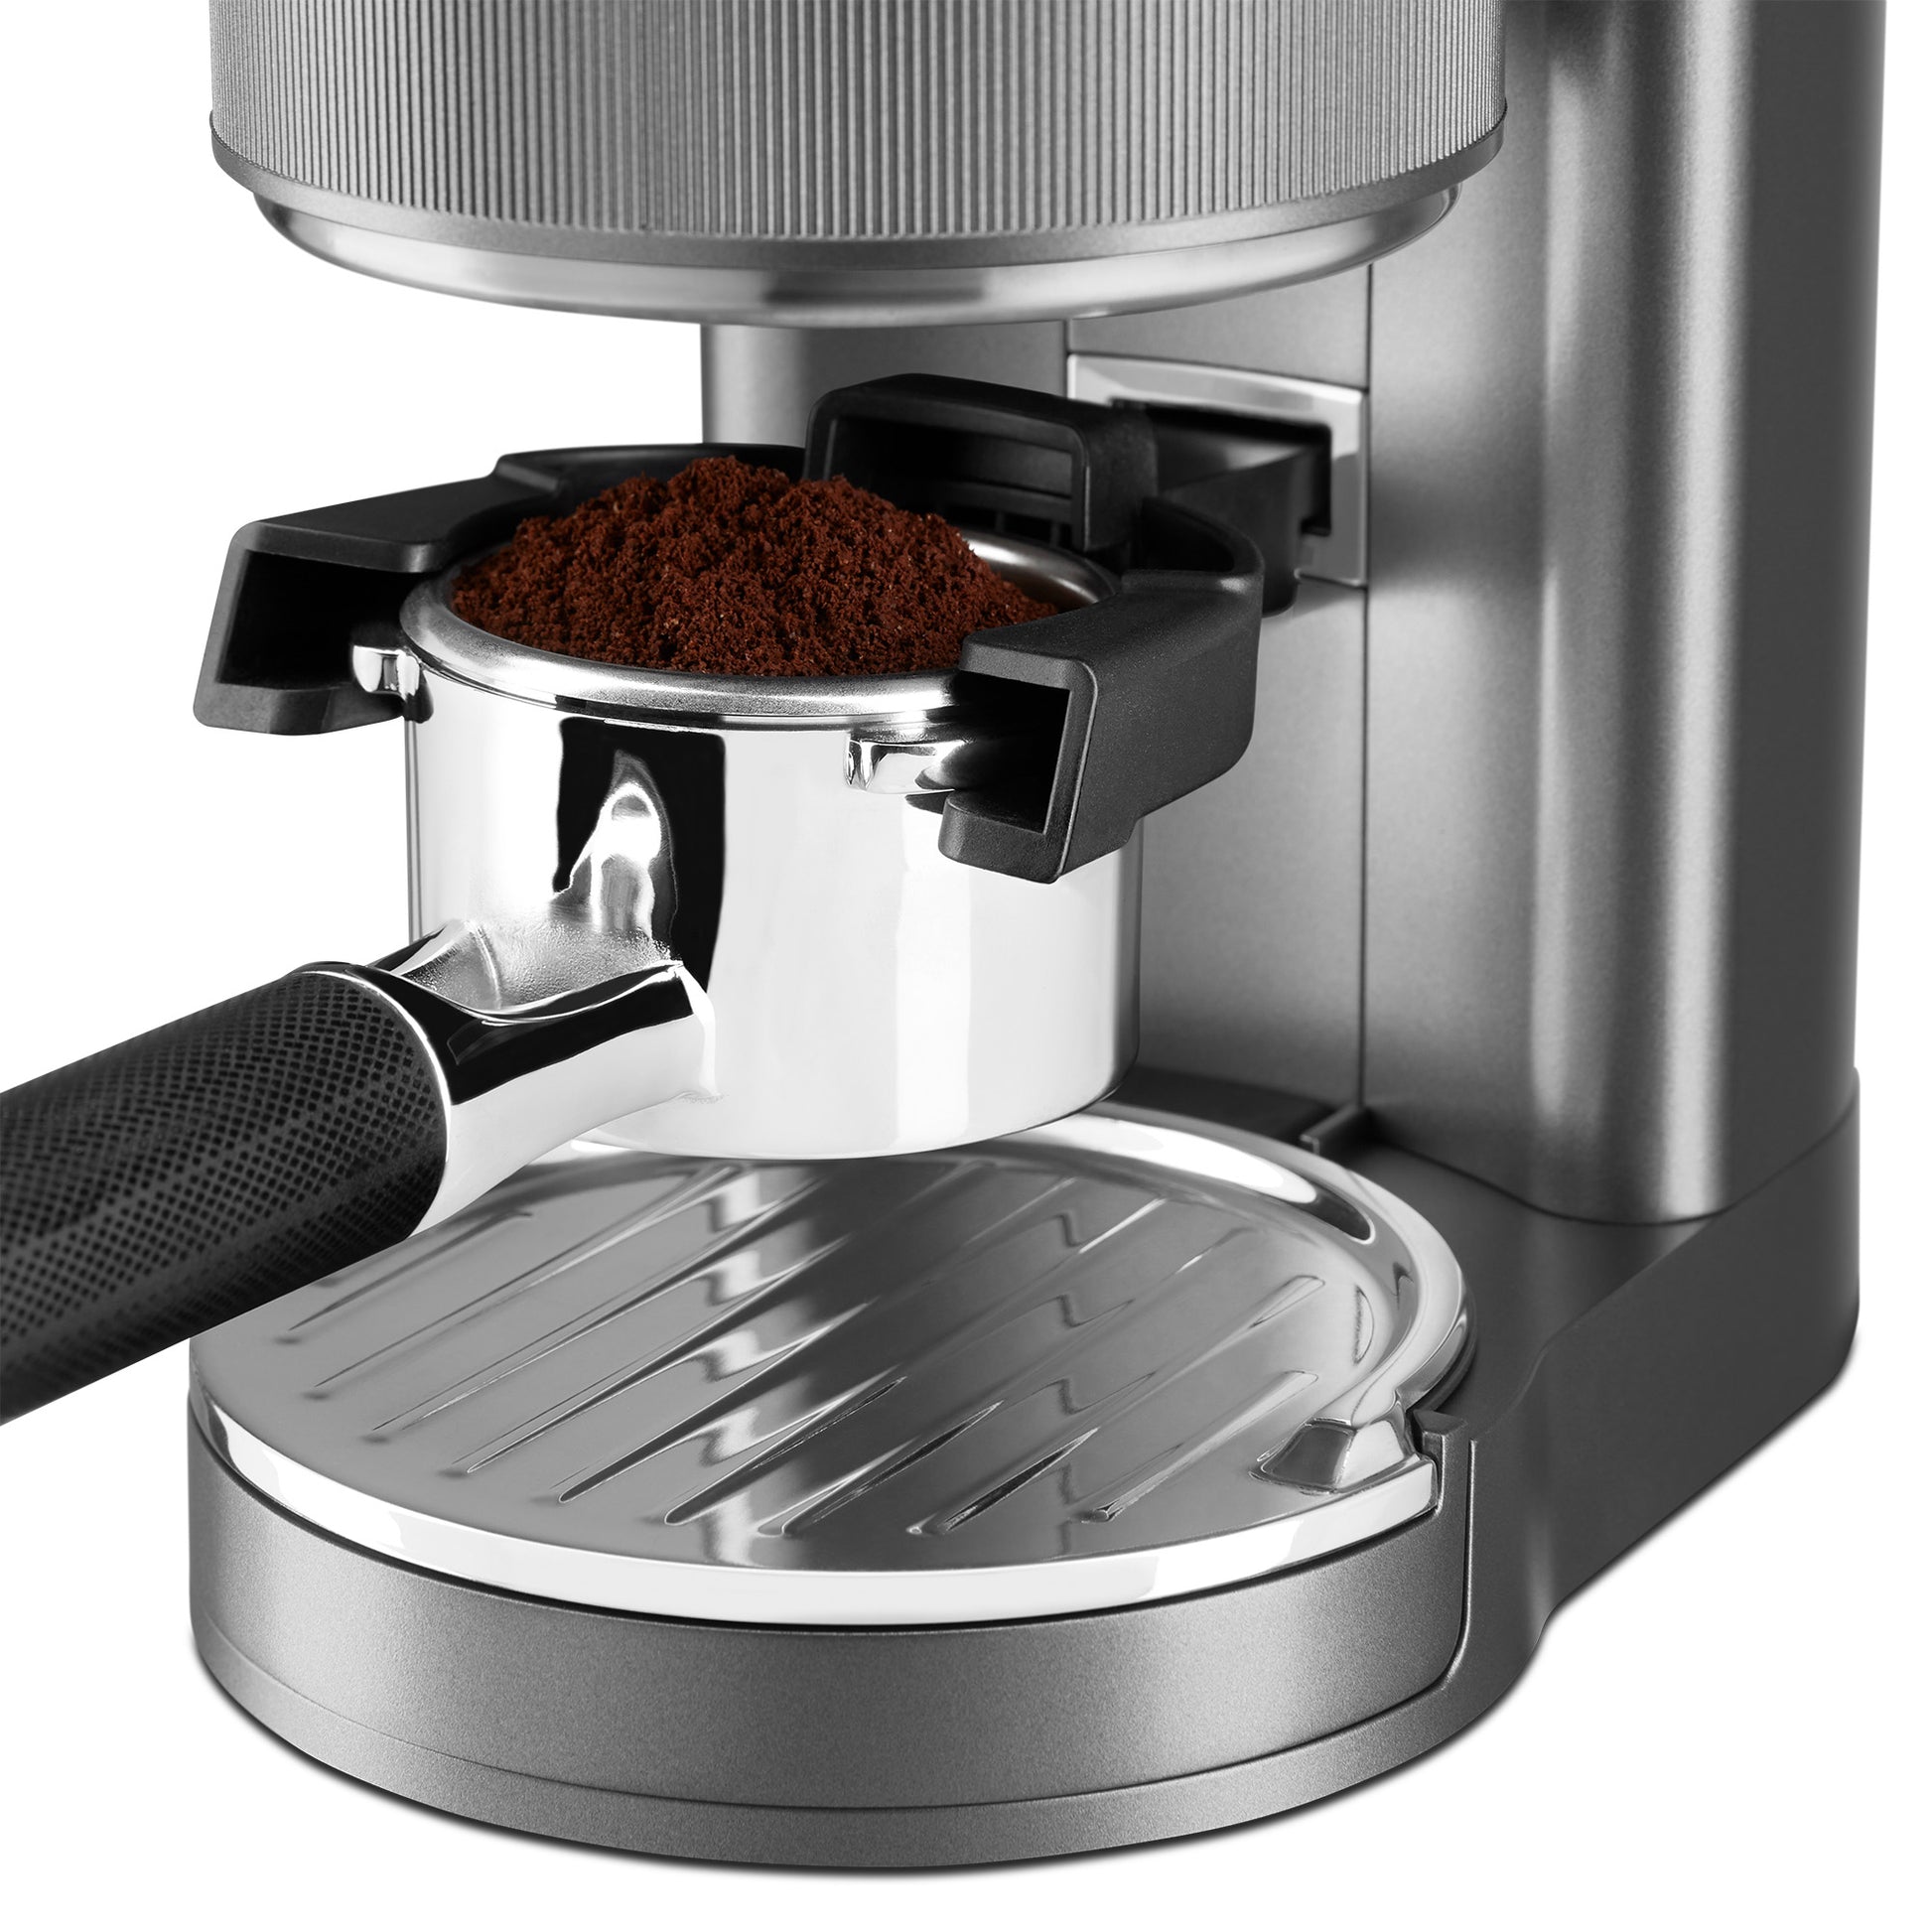 KitchenAid Burr Coffee Grinder in Matte Charcoal Grey